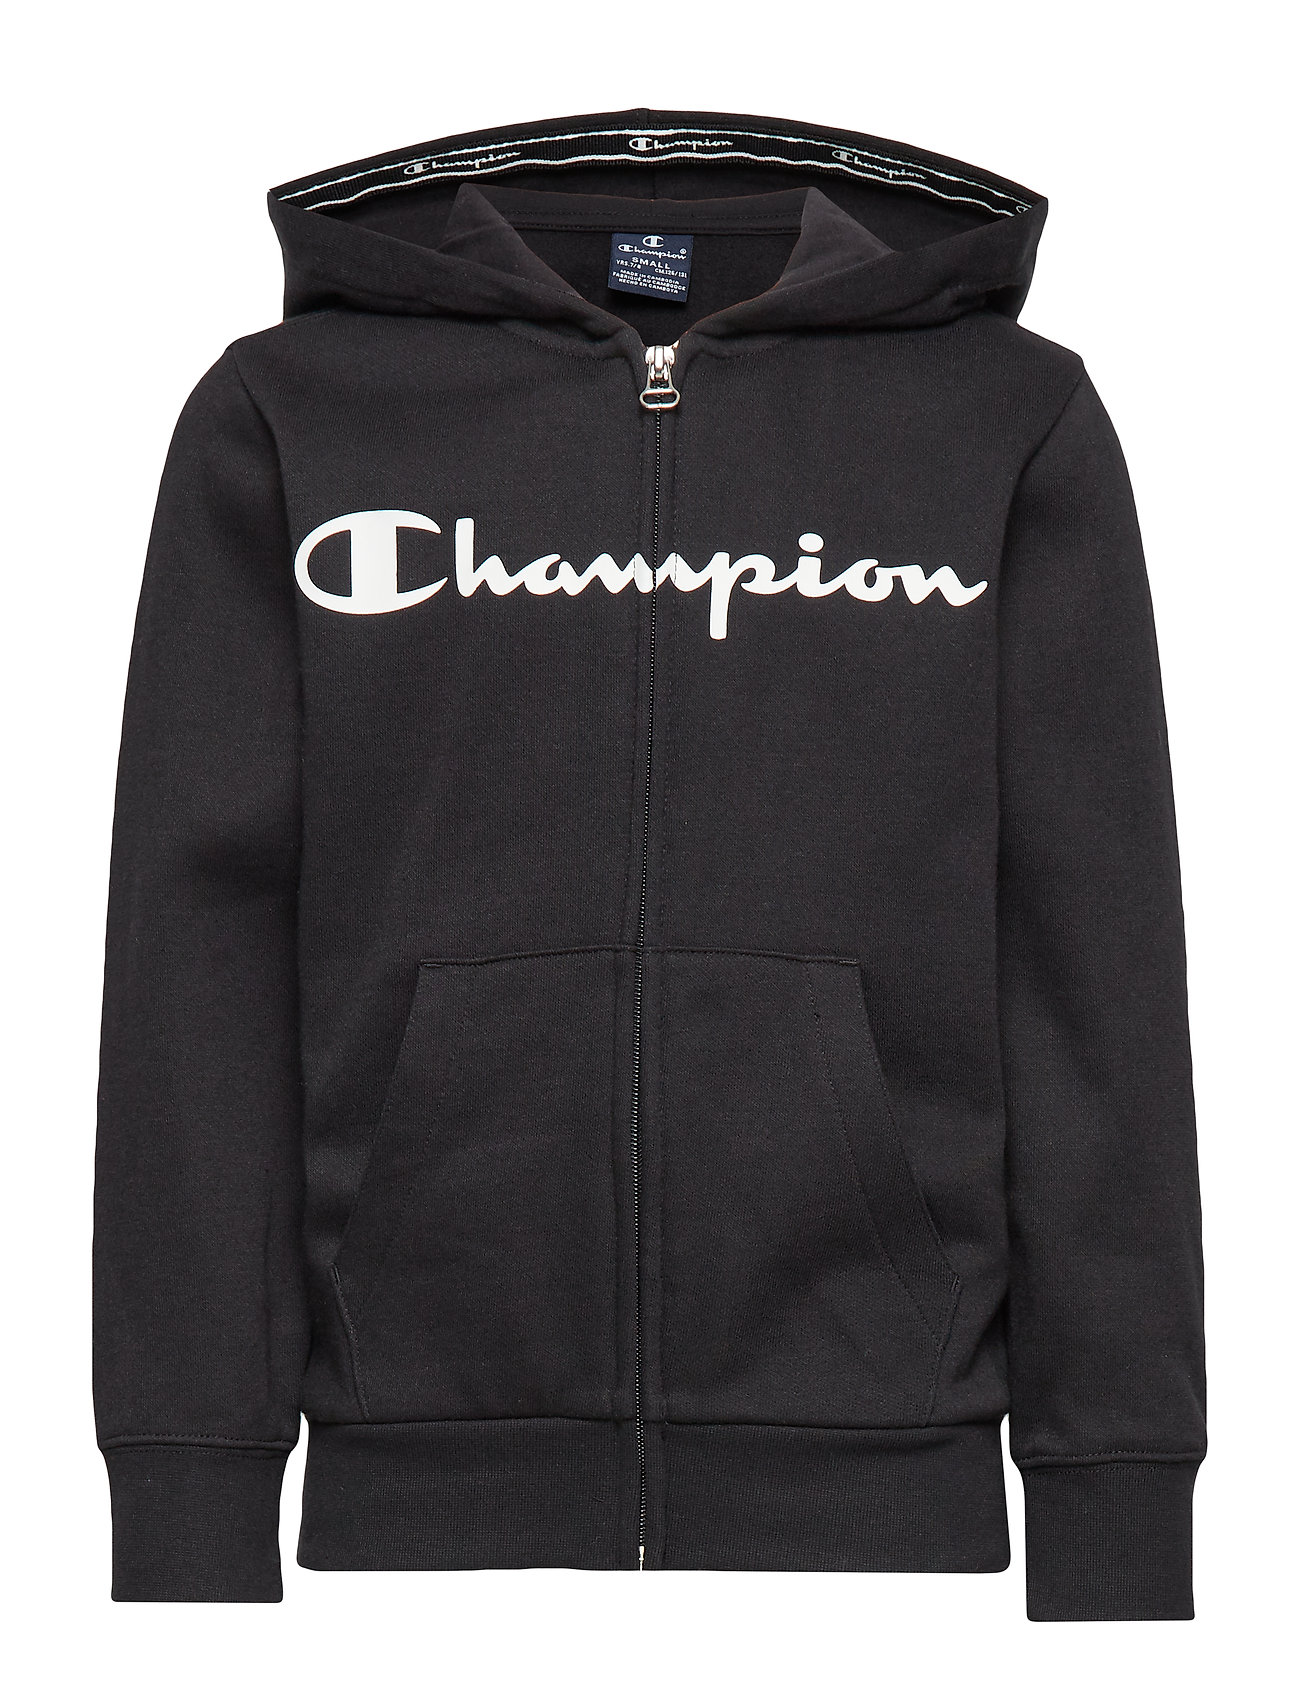 champion crewneck sweatshirt size chart